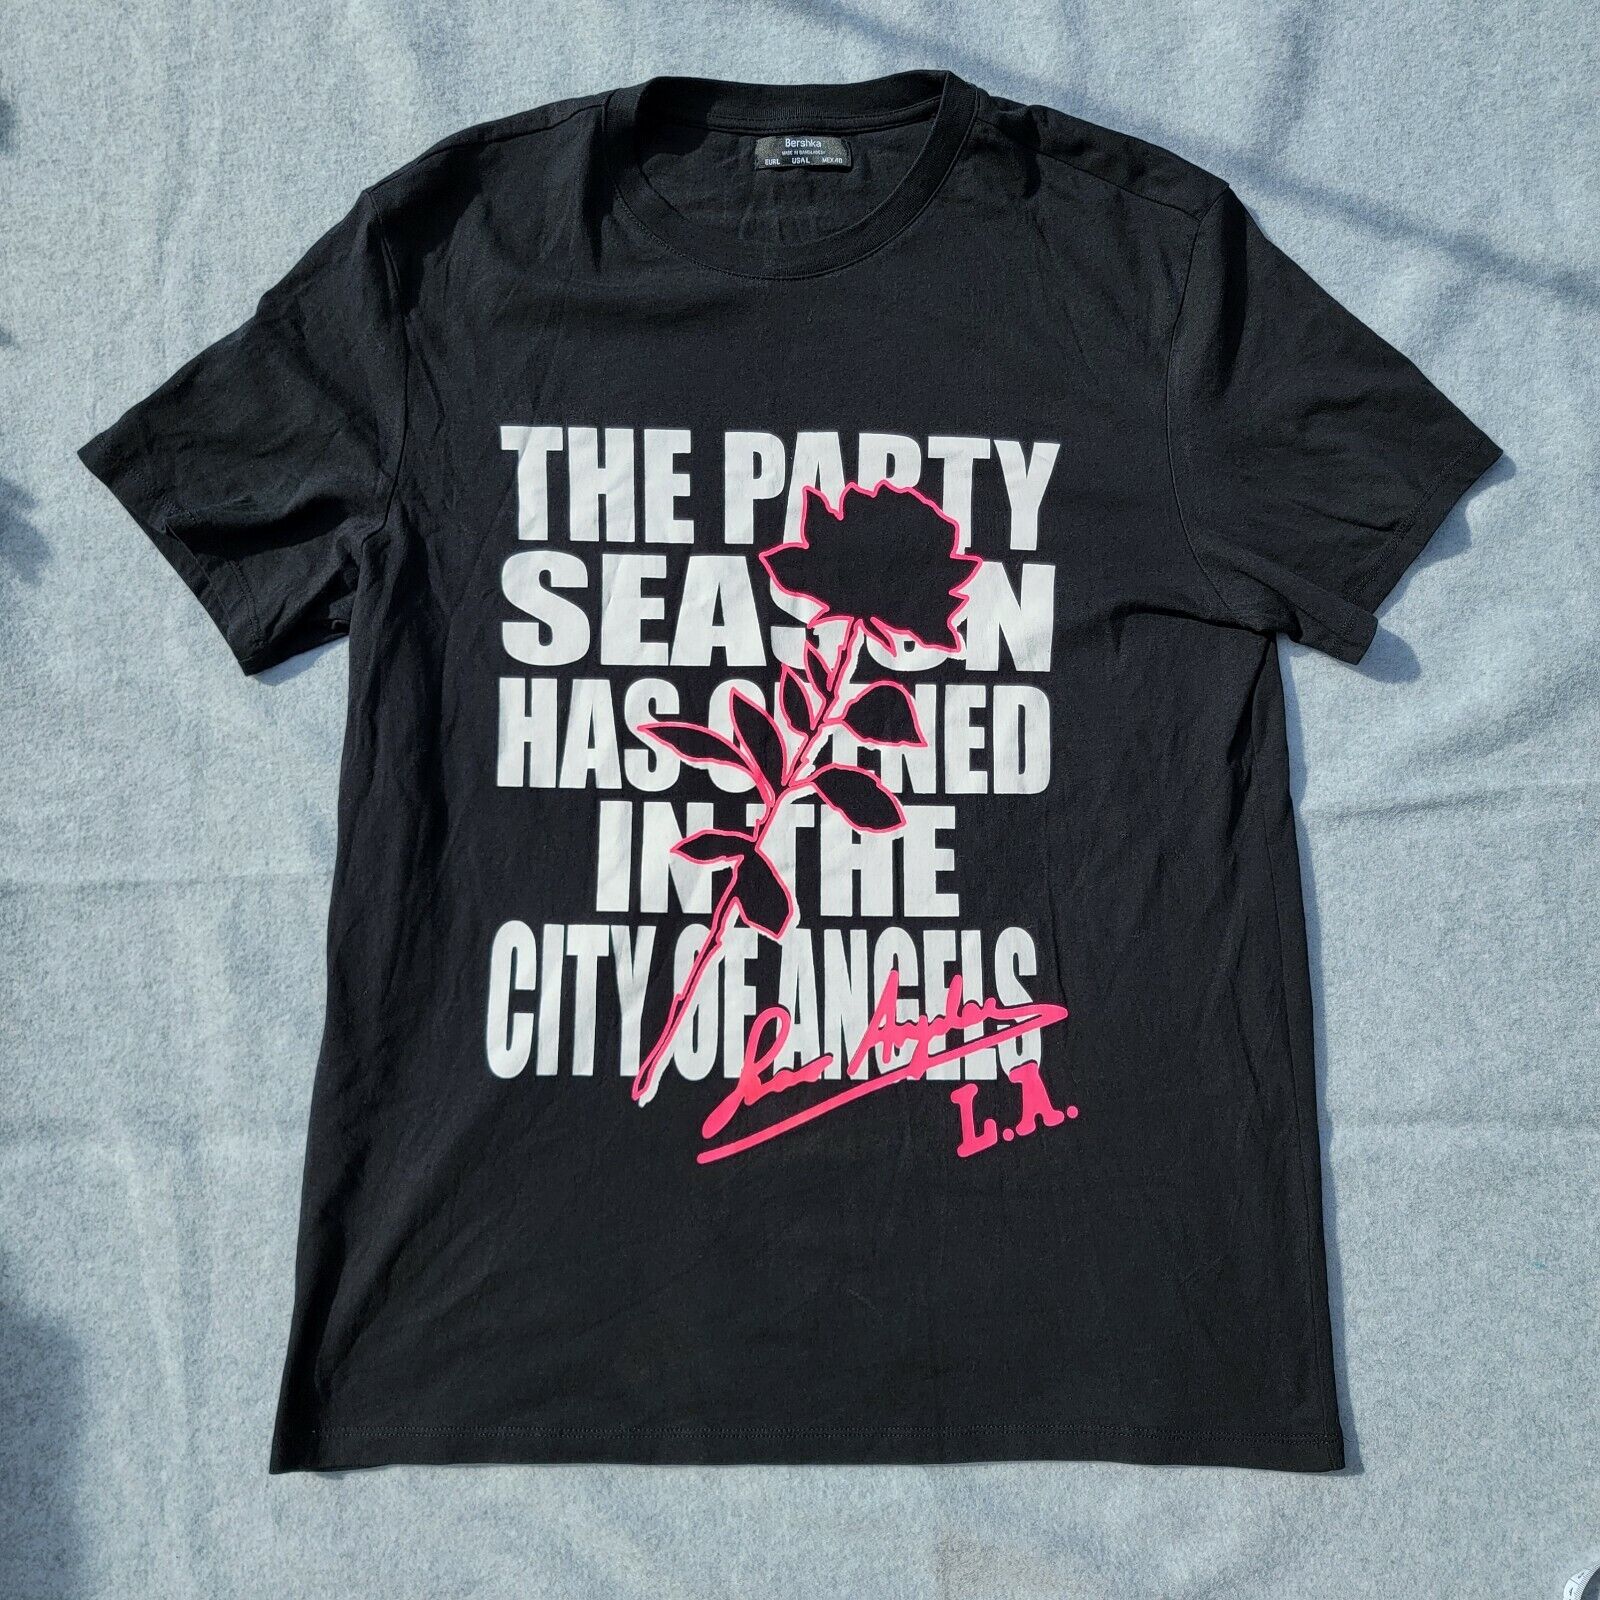 Oproepen evolutie Klagen Bershka Black Shirt City of Angels LA Party Season Has Opened Size Large  Unisex | eBay